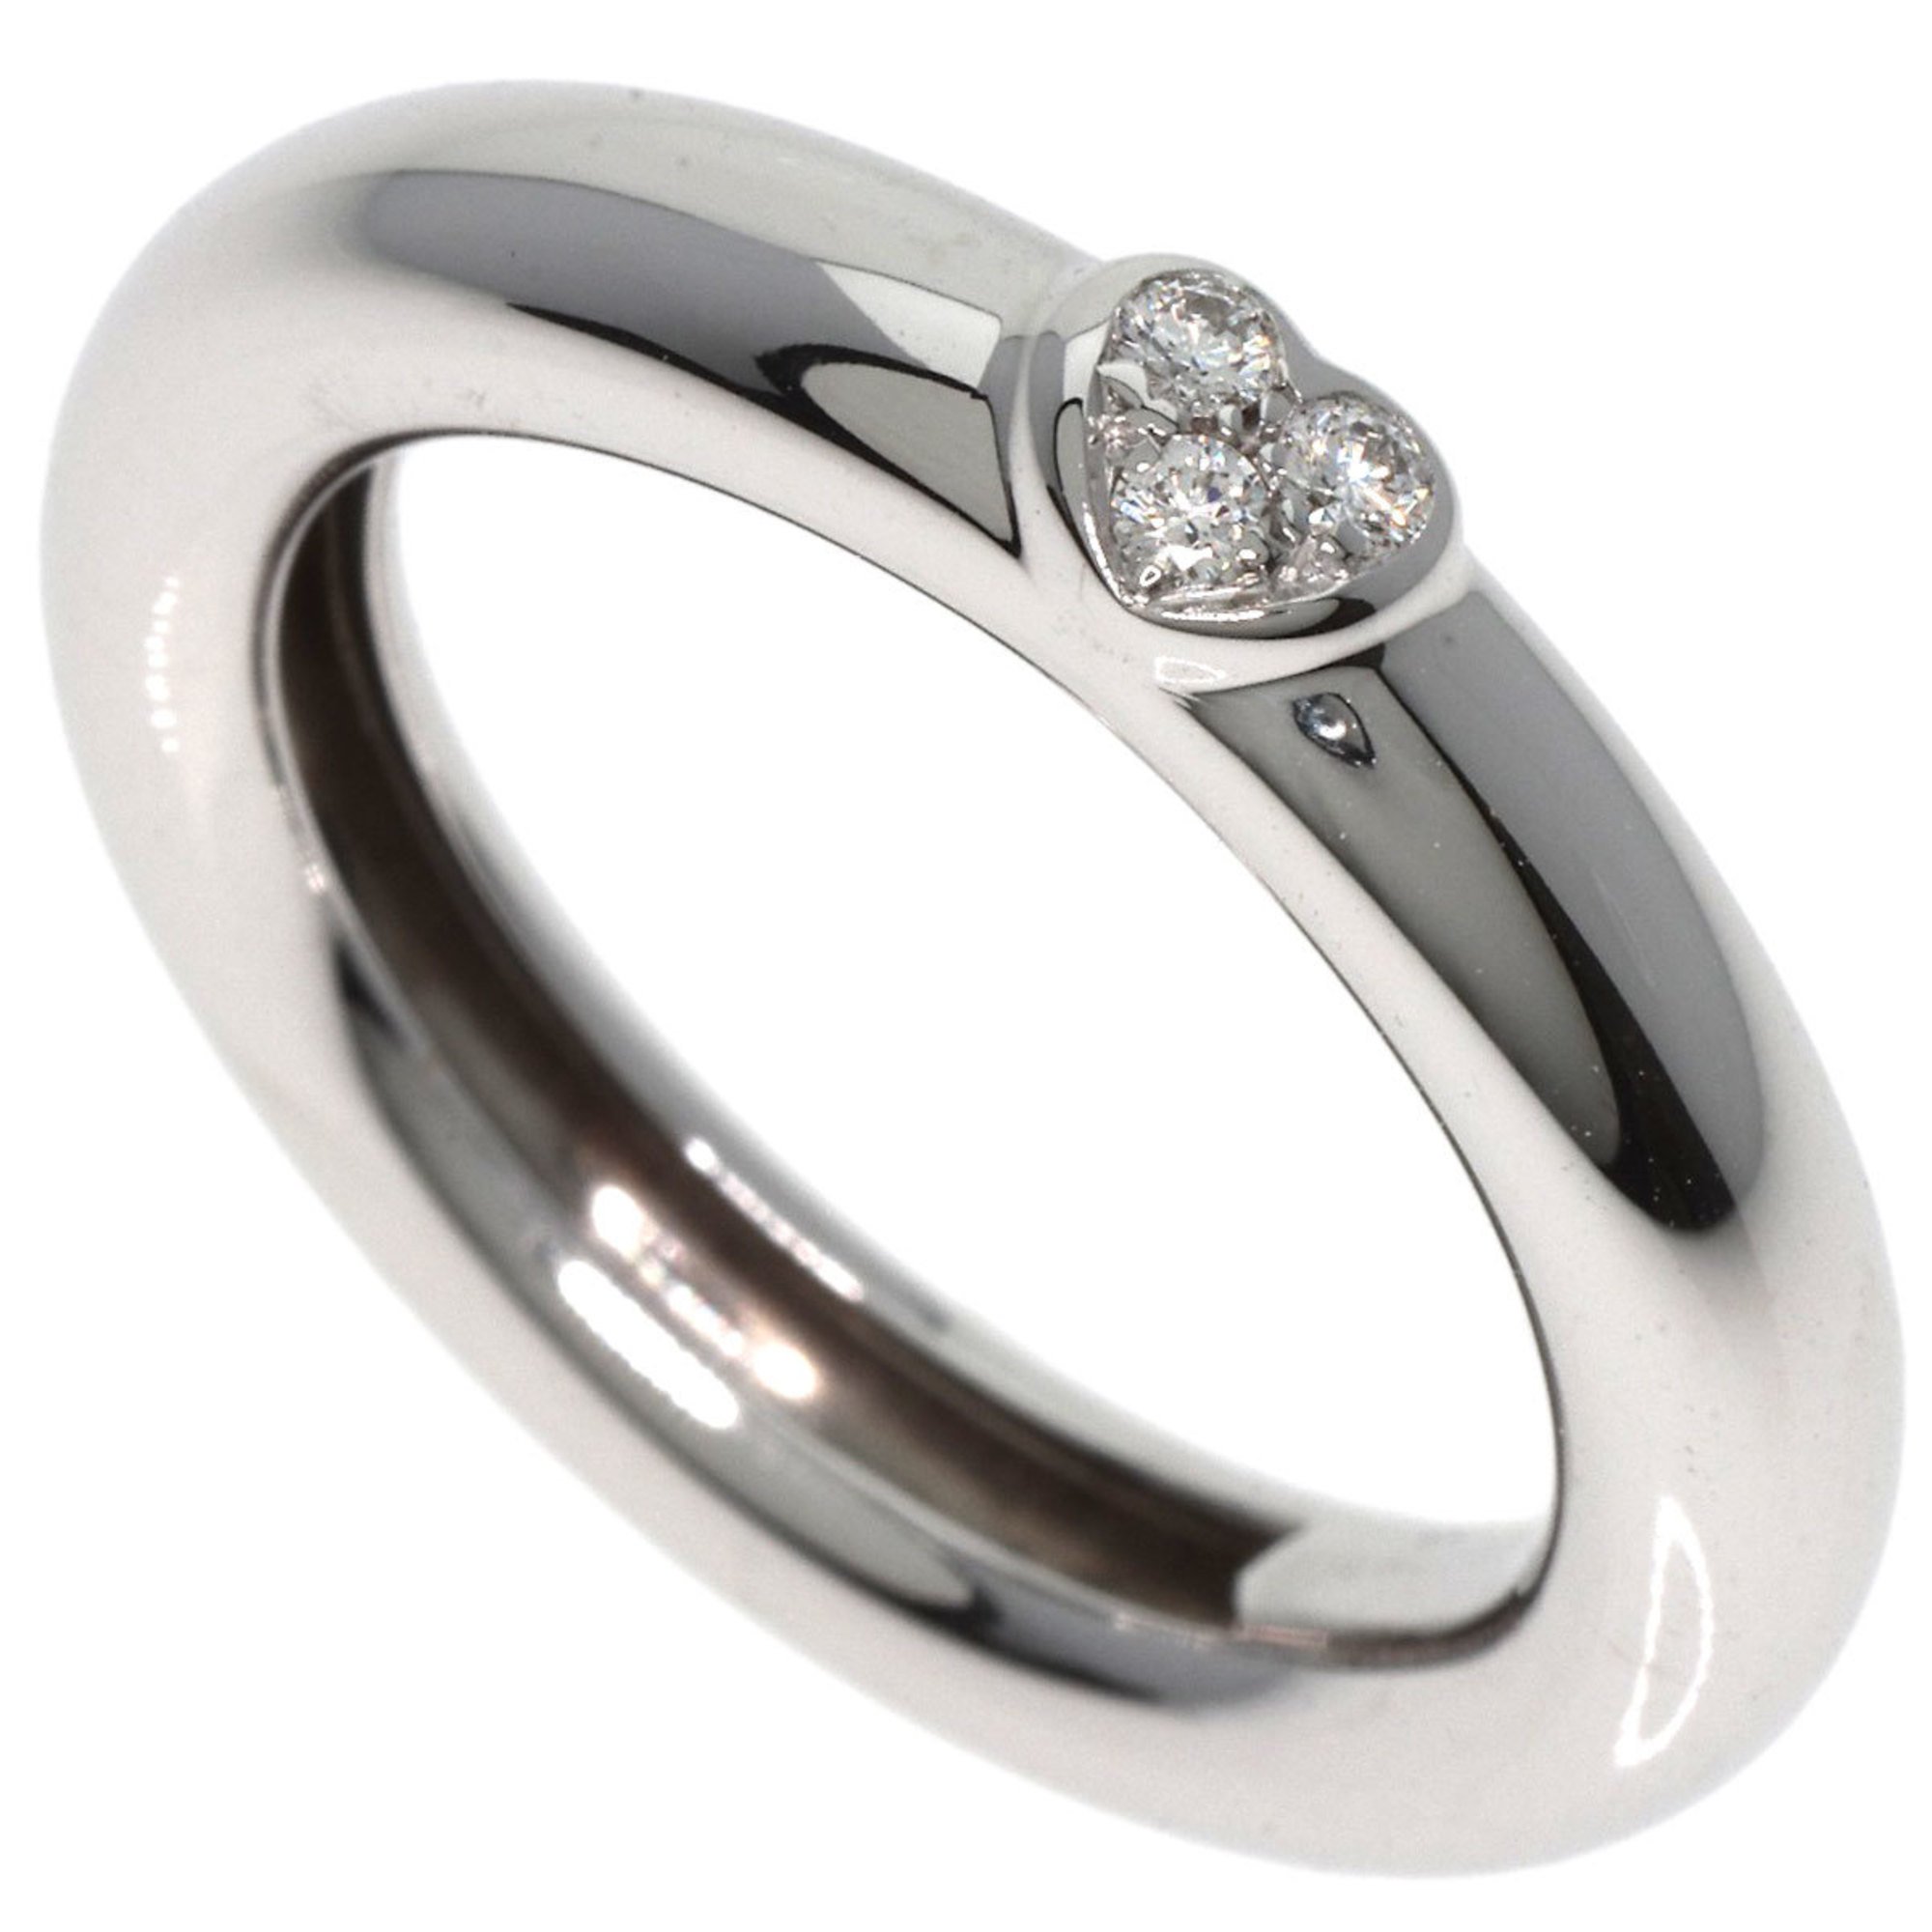 Tiffany Friendship Heart Diamond Ring, 18K White Gold, Women's